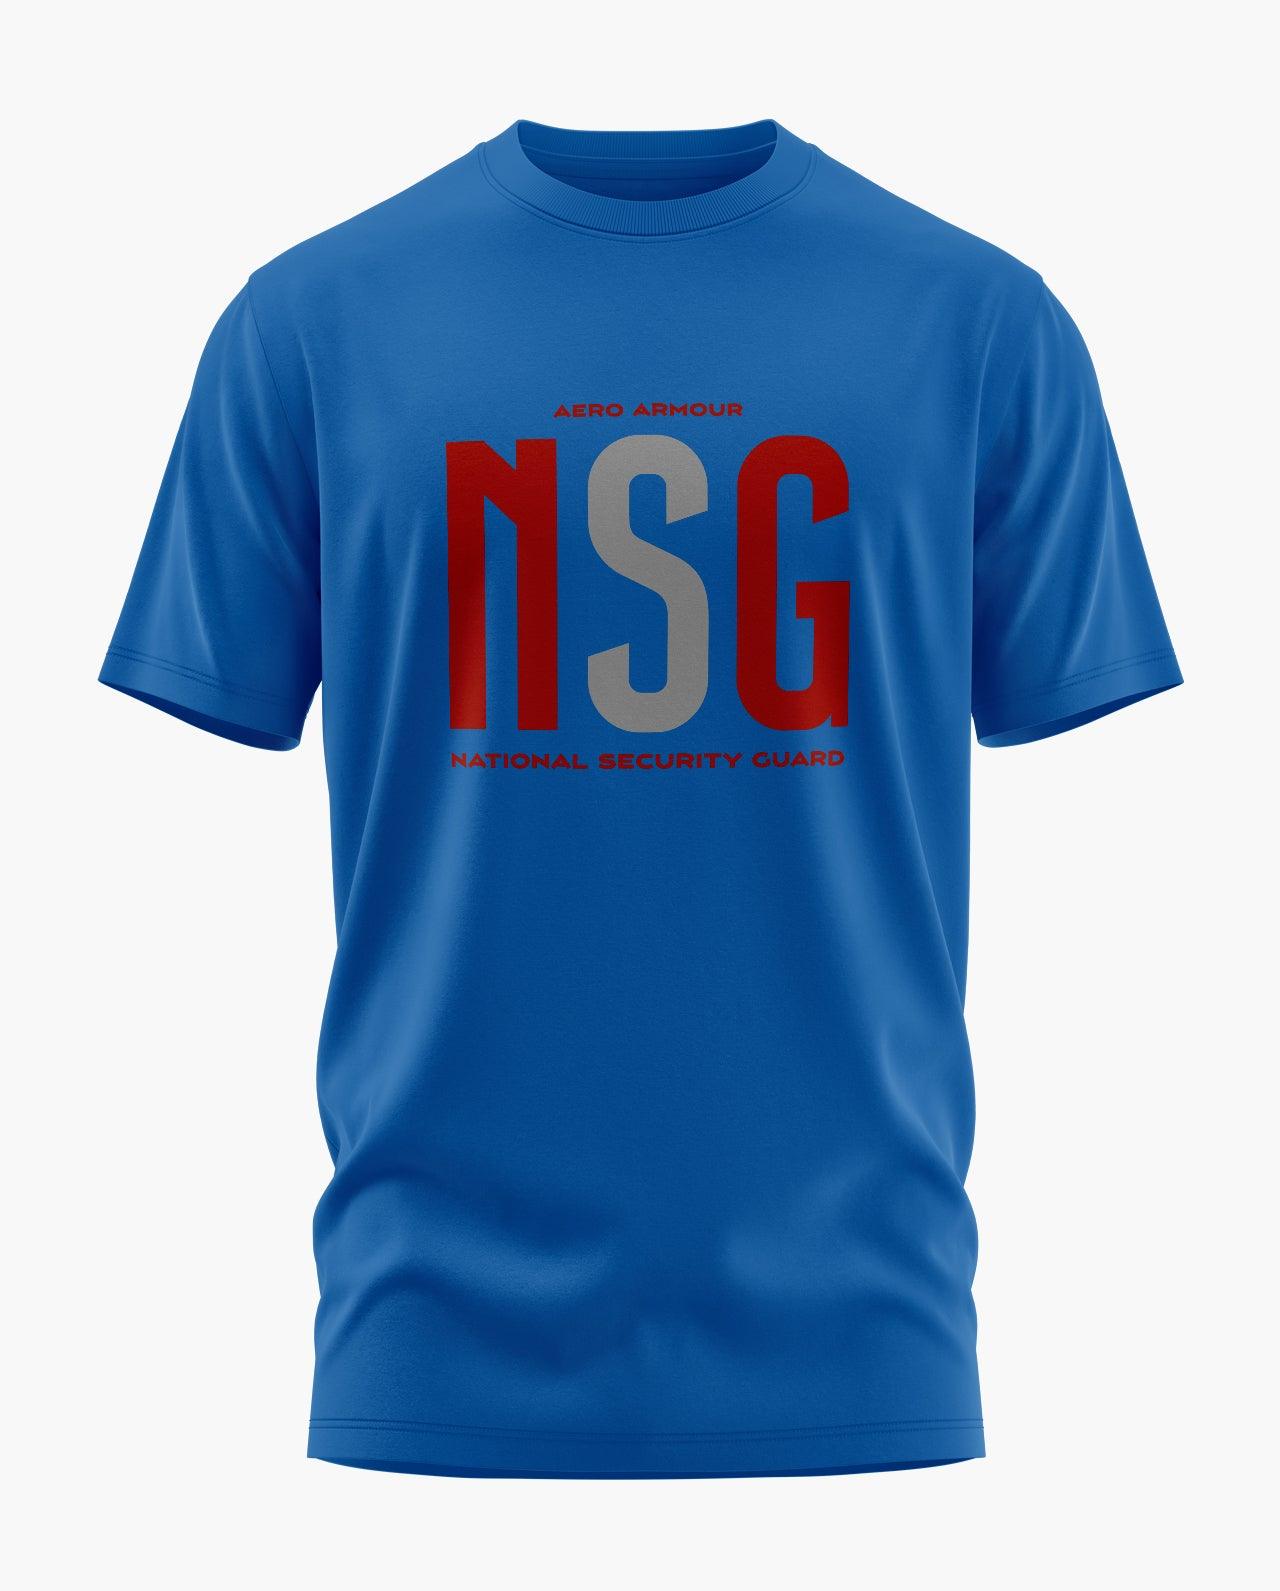 NSG Super Soldiers T-Shirt - Aero Armour